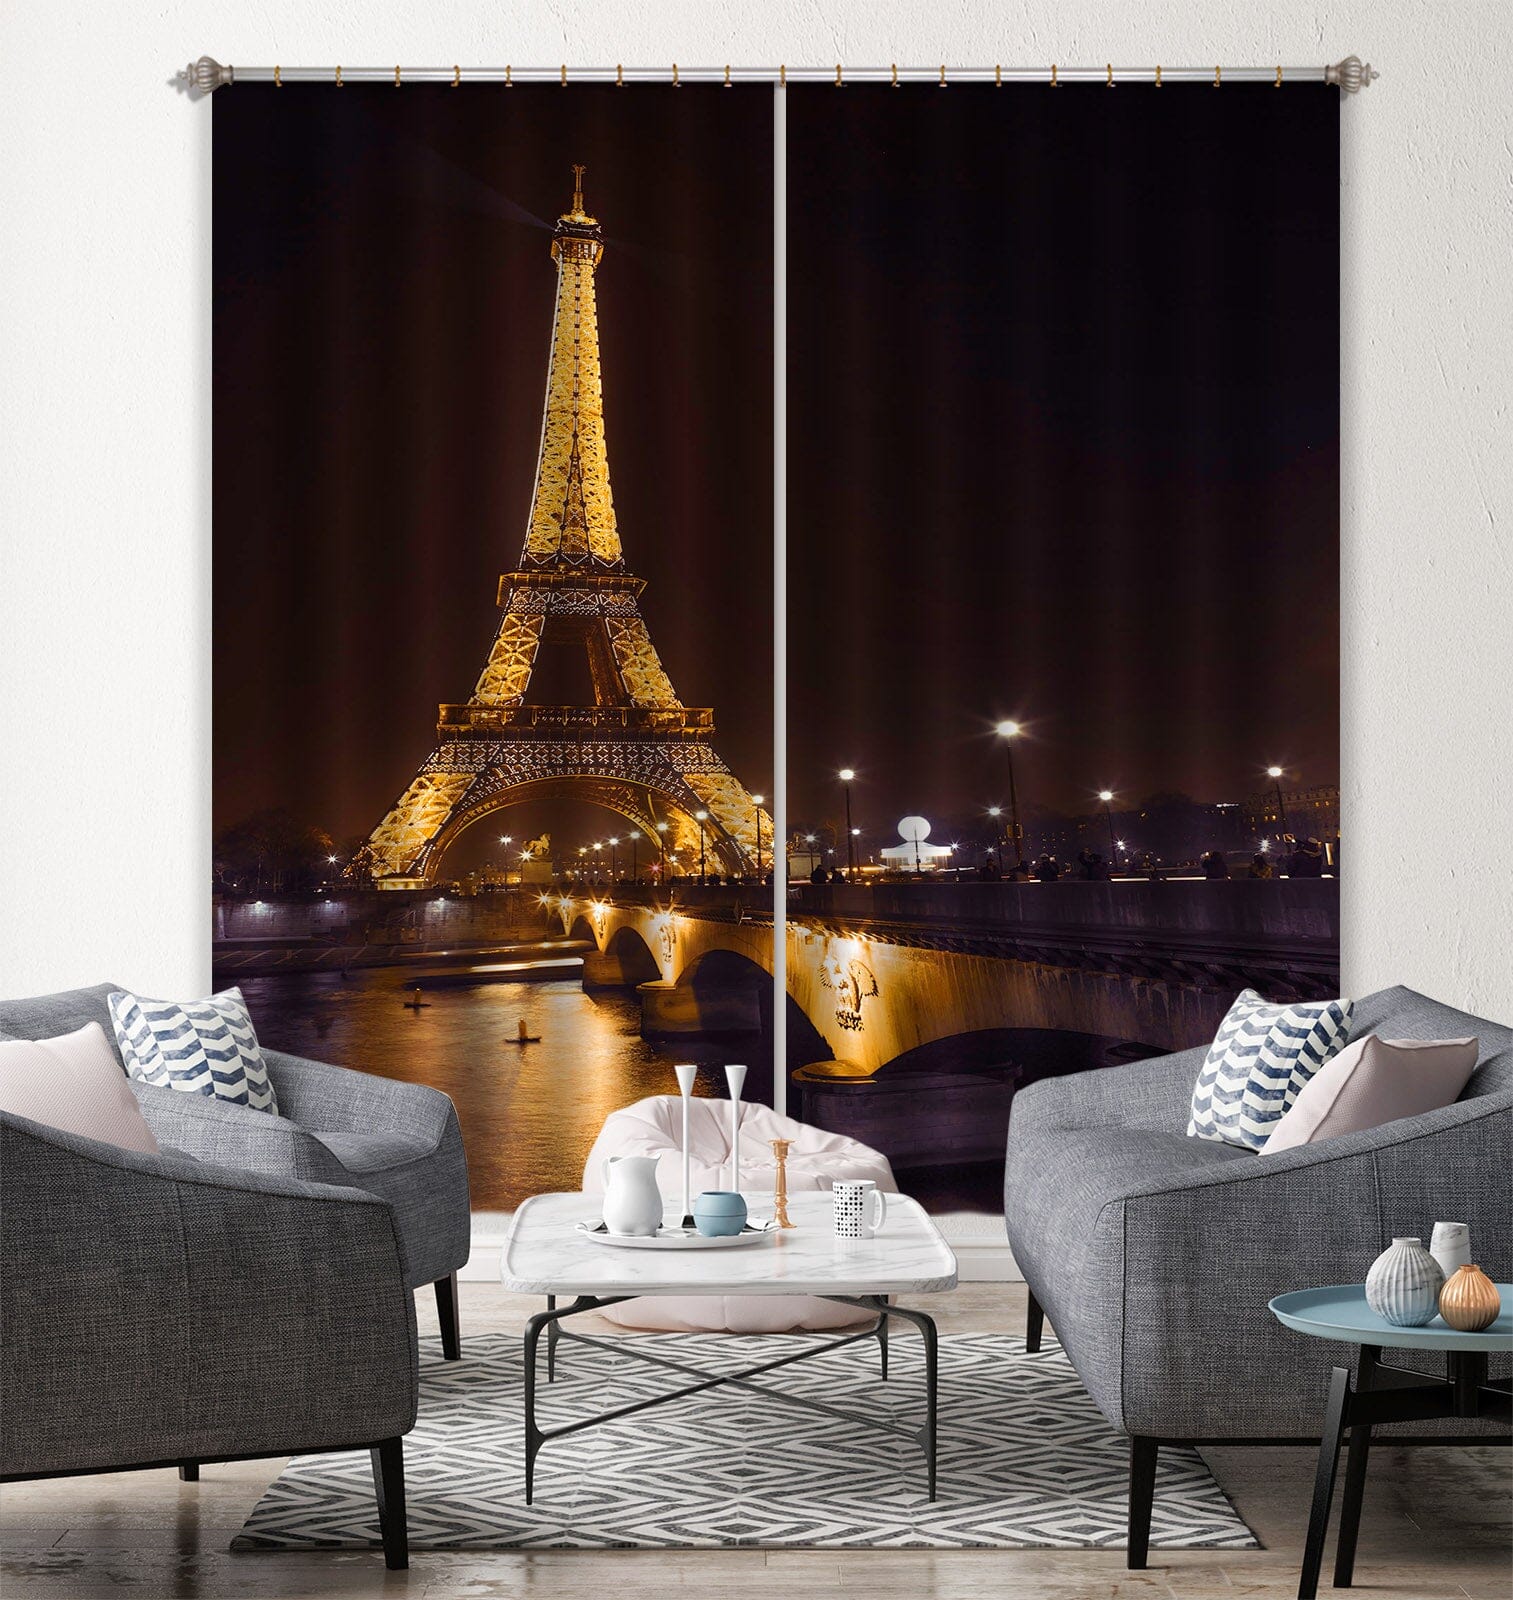 3D Eiffel Tower 003 Assaf Frank Curtain Curtains Drapes Curtains AJ Creativity Home 